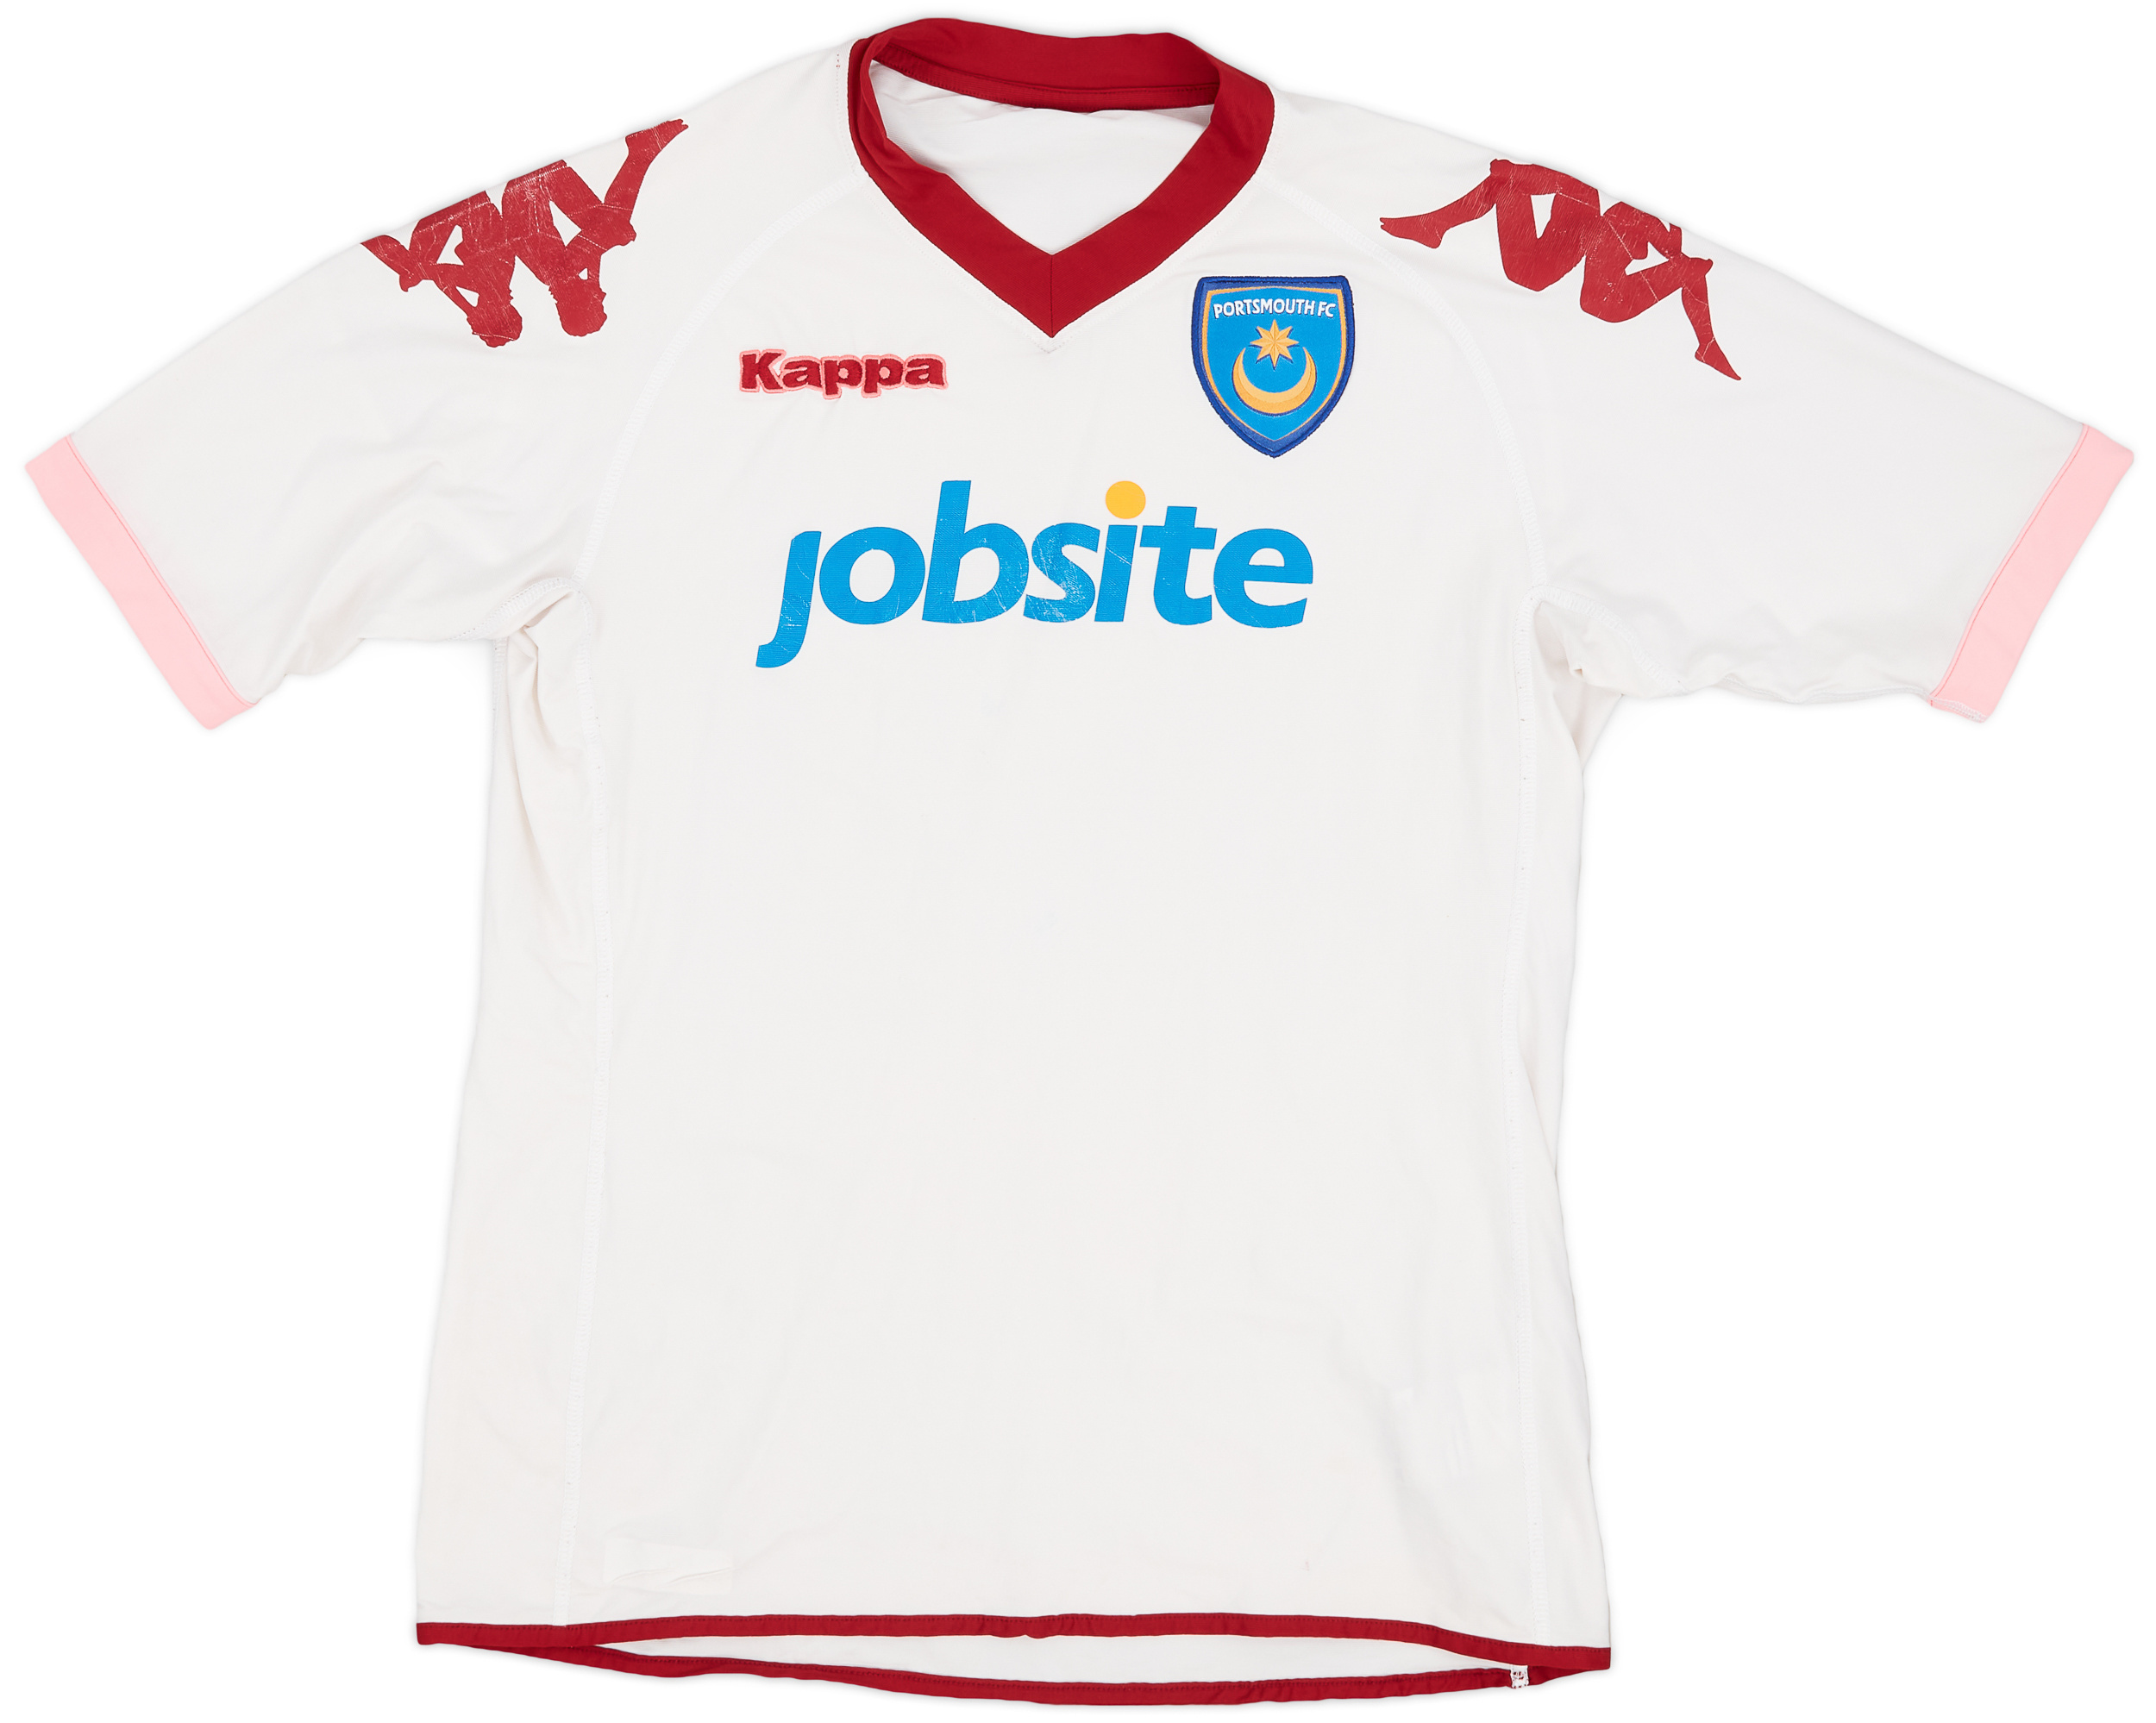 2010-11 Portsmouth Away Shirt - 6/10 - ()